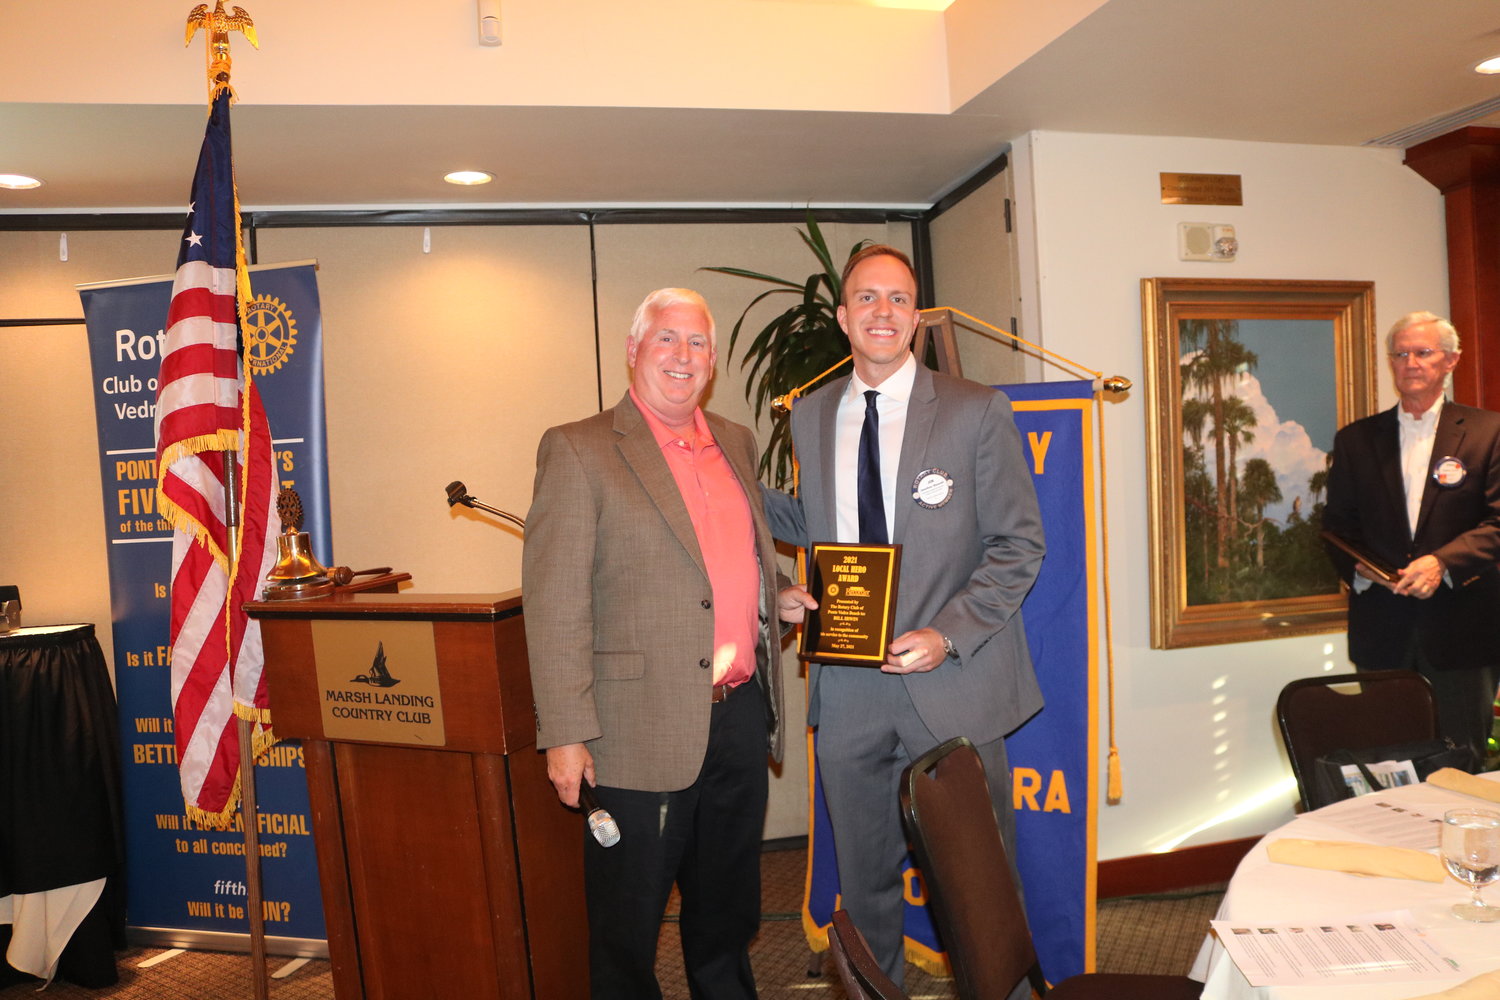 Bill Irwin receives his Local Heroes award from Jon Blauvelt.